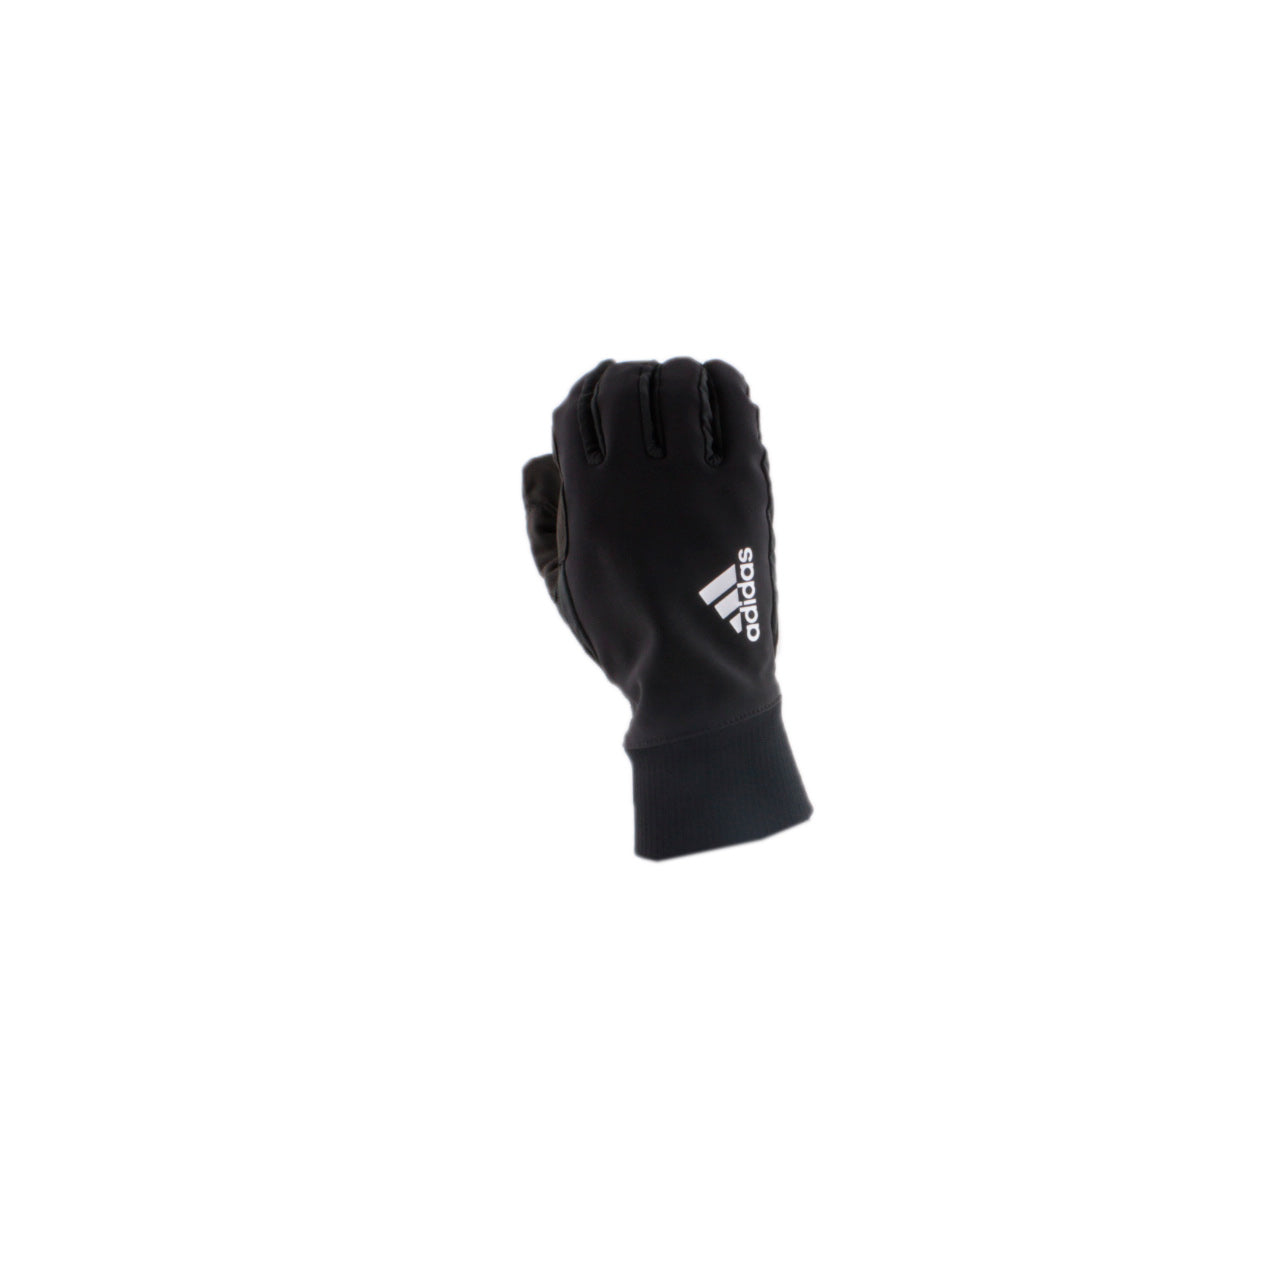 Adidas Competition Glove + Handschuhe Athleten X-Country Biathlon CE7934 - Brand Dealers Arena e.K. - BDA24